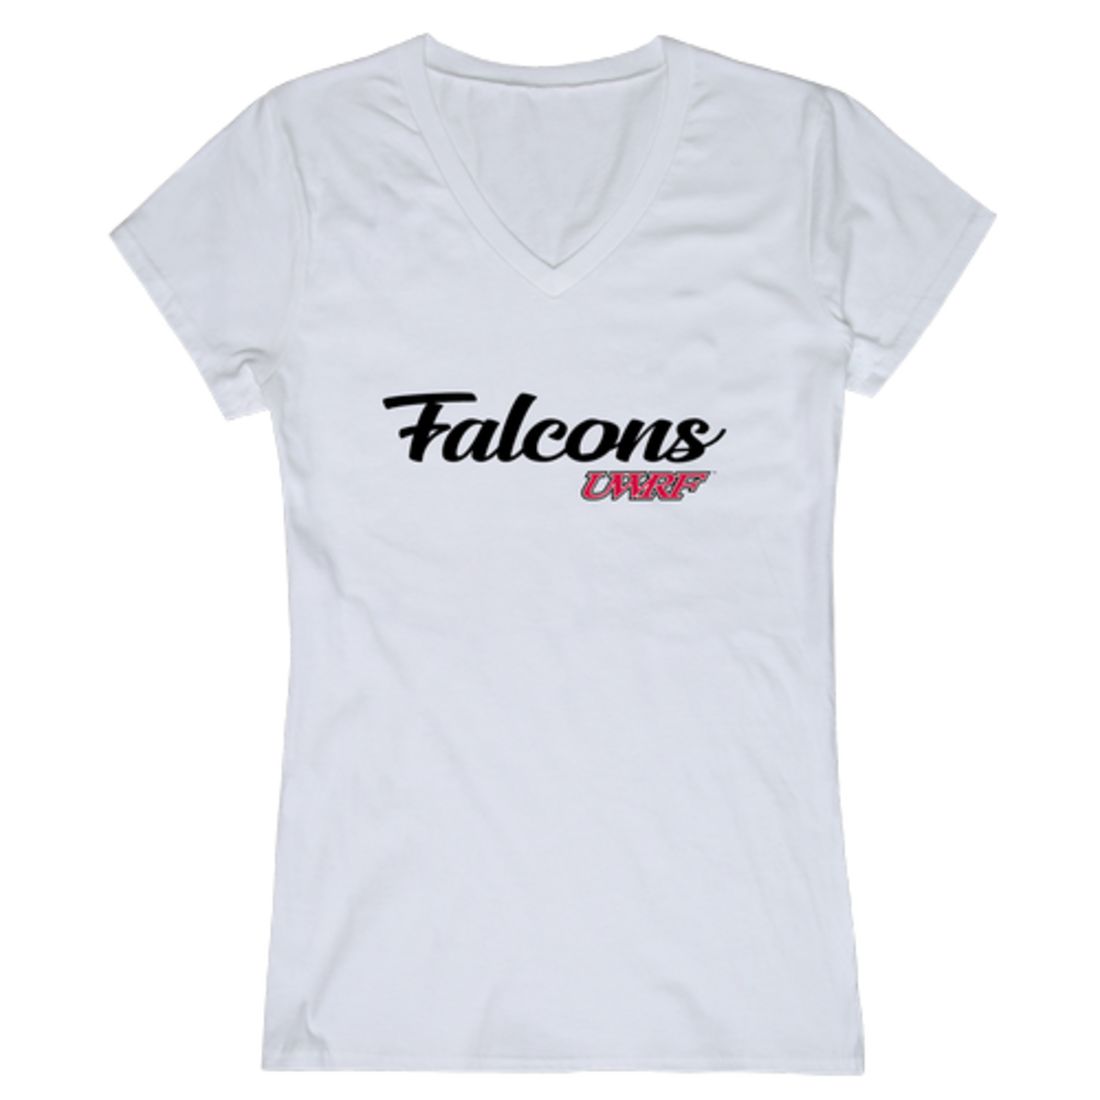 UWRF University of Wisconsin River Falls Falcons Womens Script Tee T-Shirt-Campus-Wardrobe